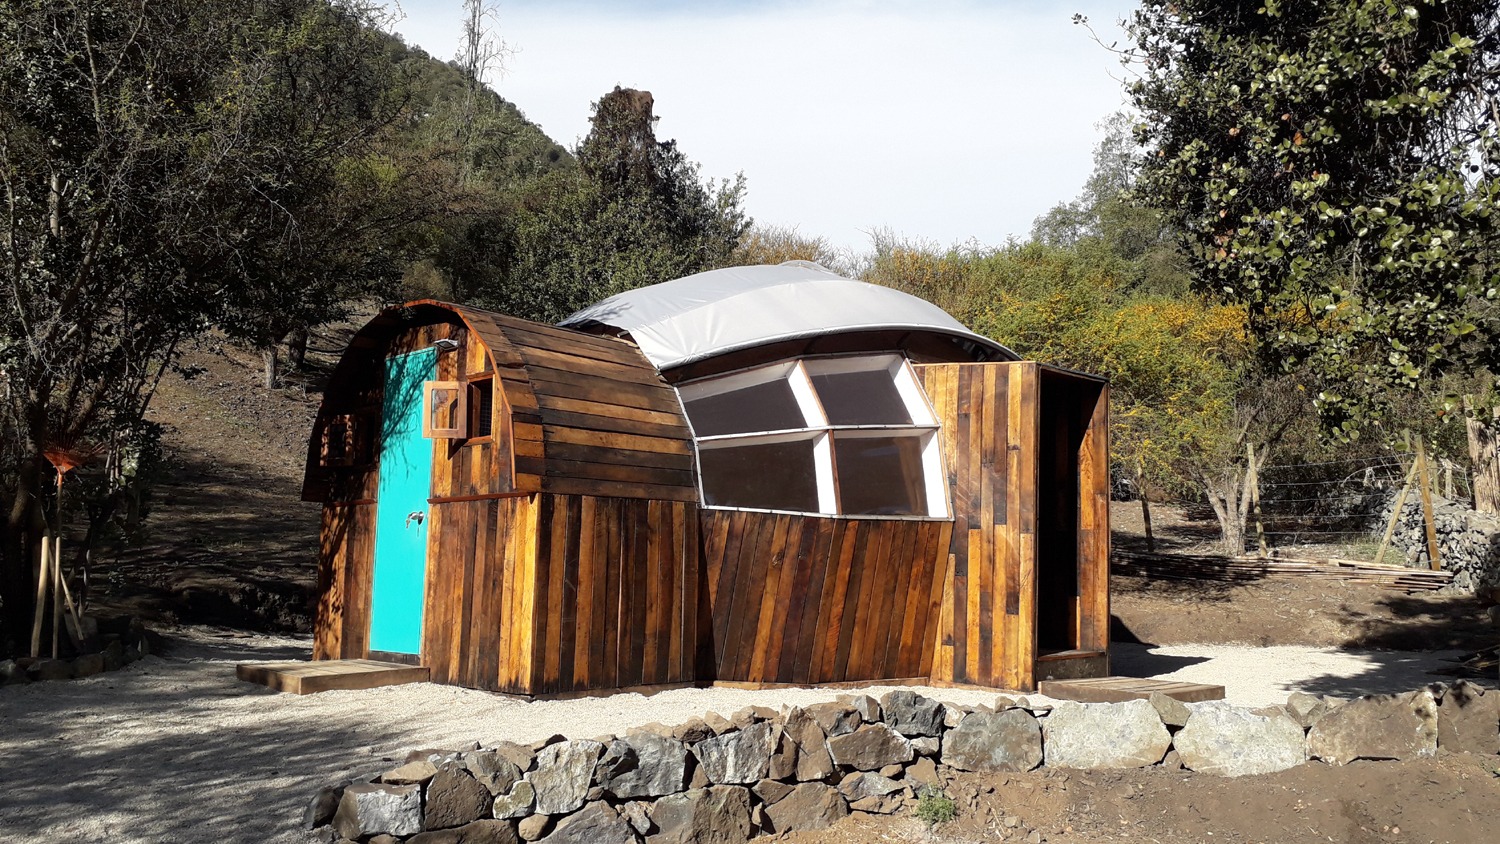 La Campana - Glamping Biosfera Lodge - 1 cama 2 plazas, 2 camas 1 plaza - Domo Espino